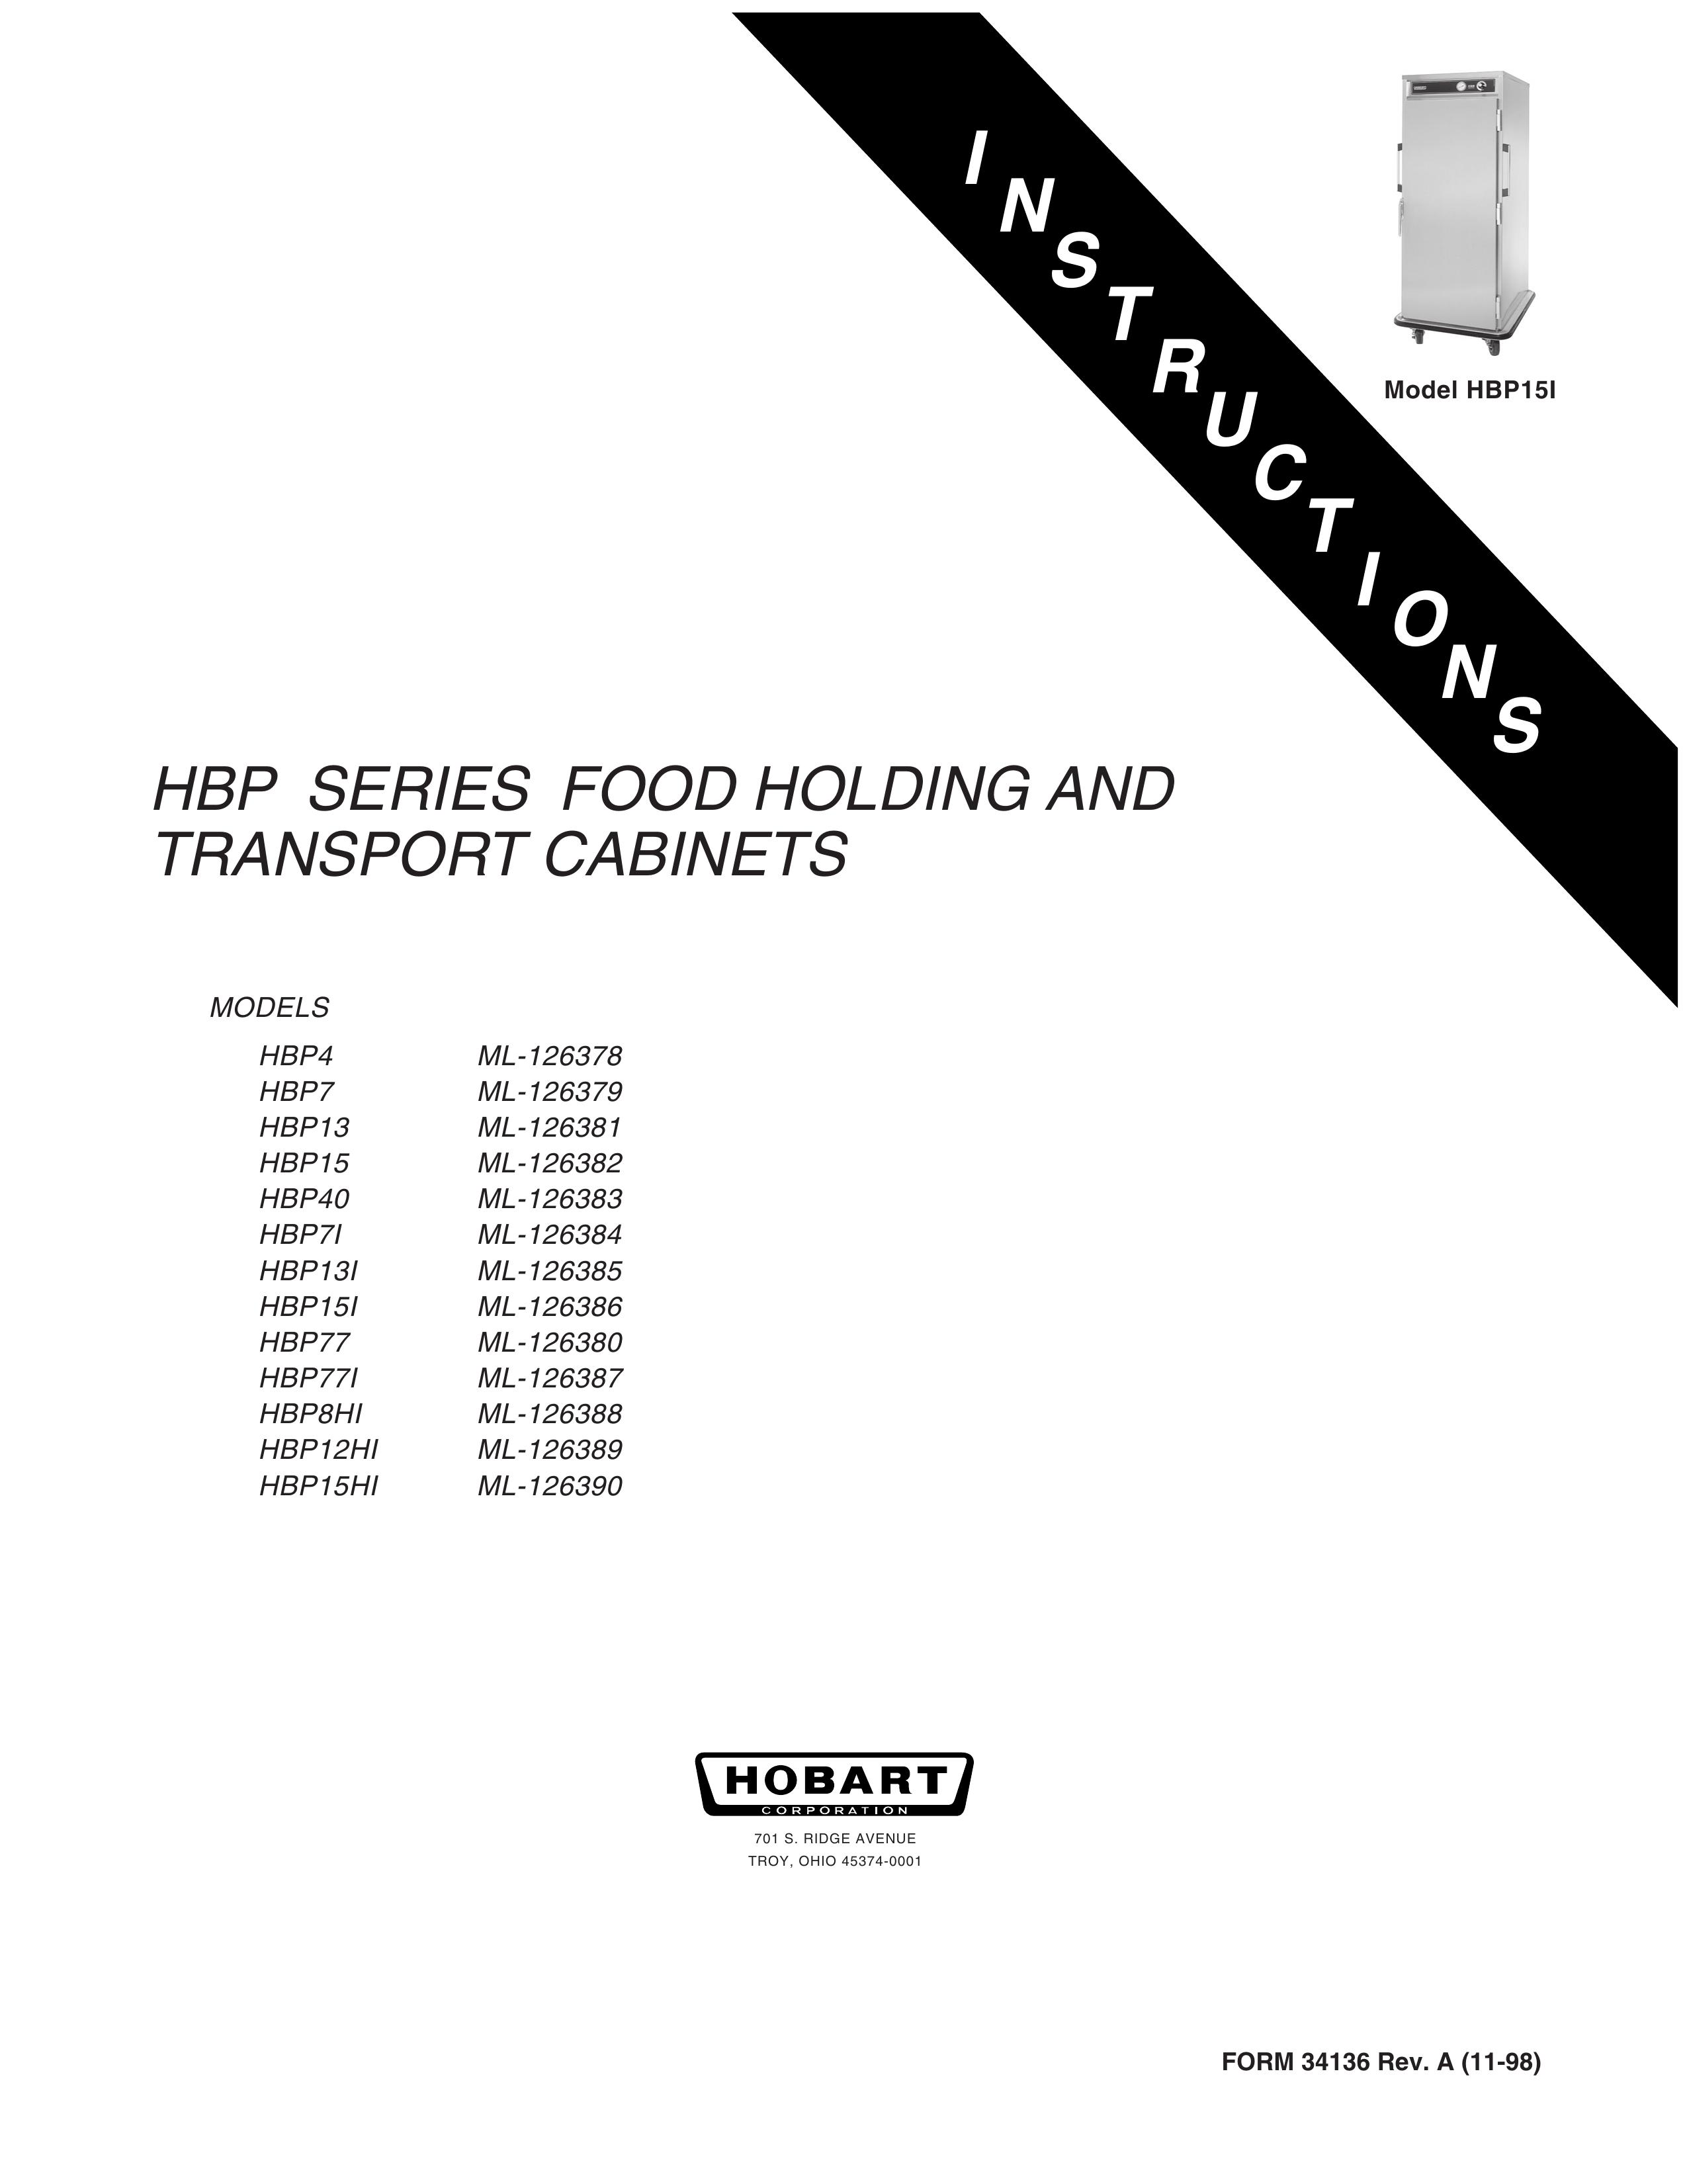 Hobart HBP40 ML-126383 Outdoor Storage User Manual